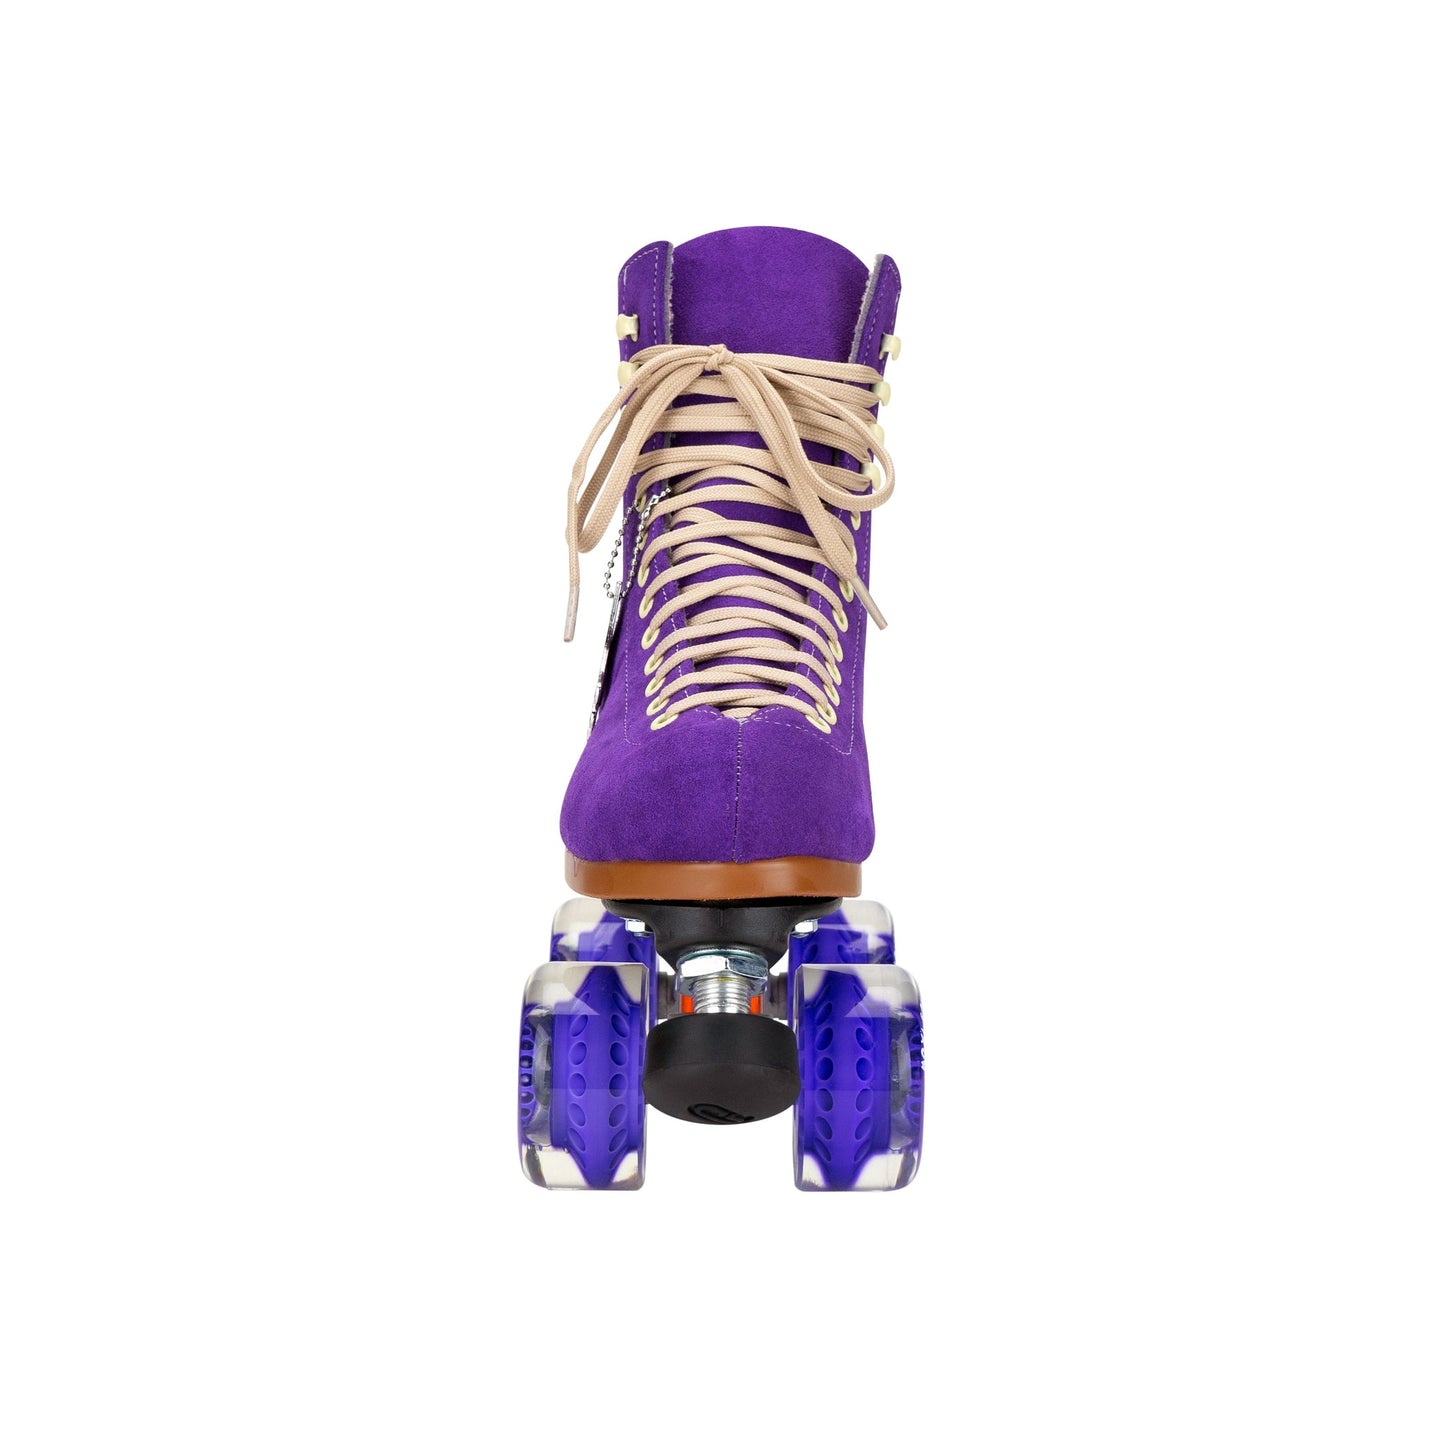 Moxi Lolly Skate - Taffy Purple ON SALE